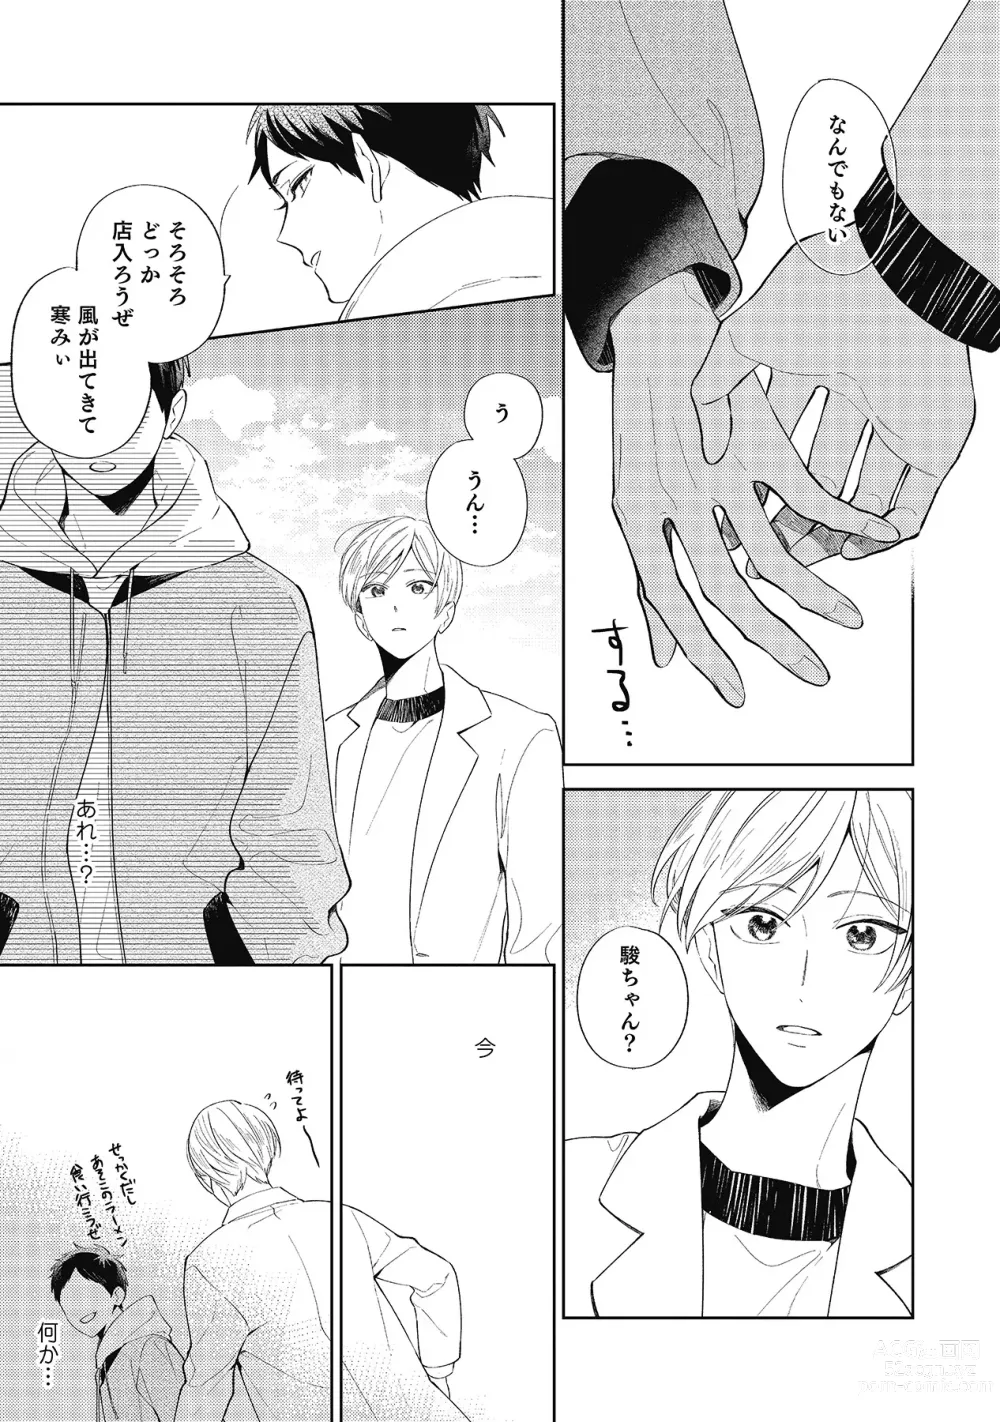 Page 27 of manga Sentimental Darling